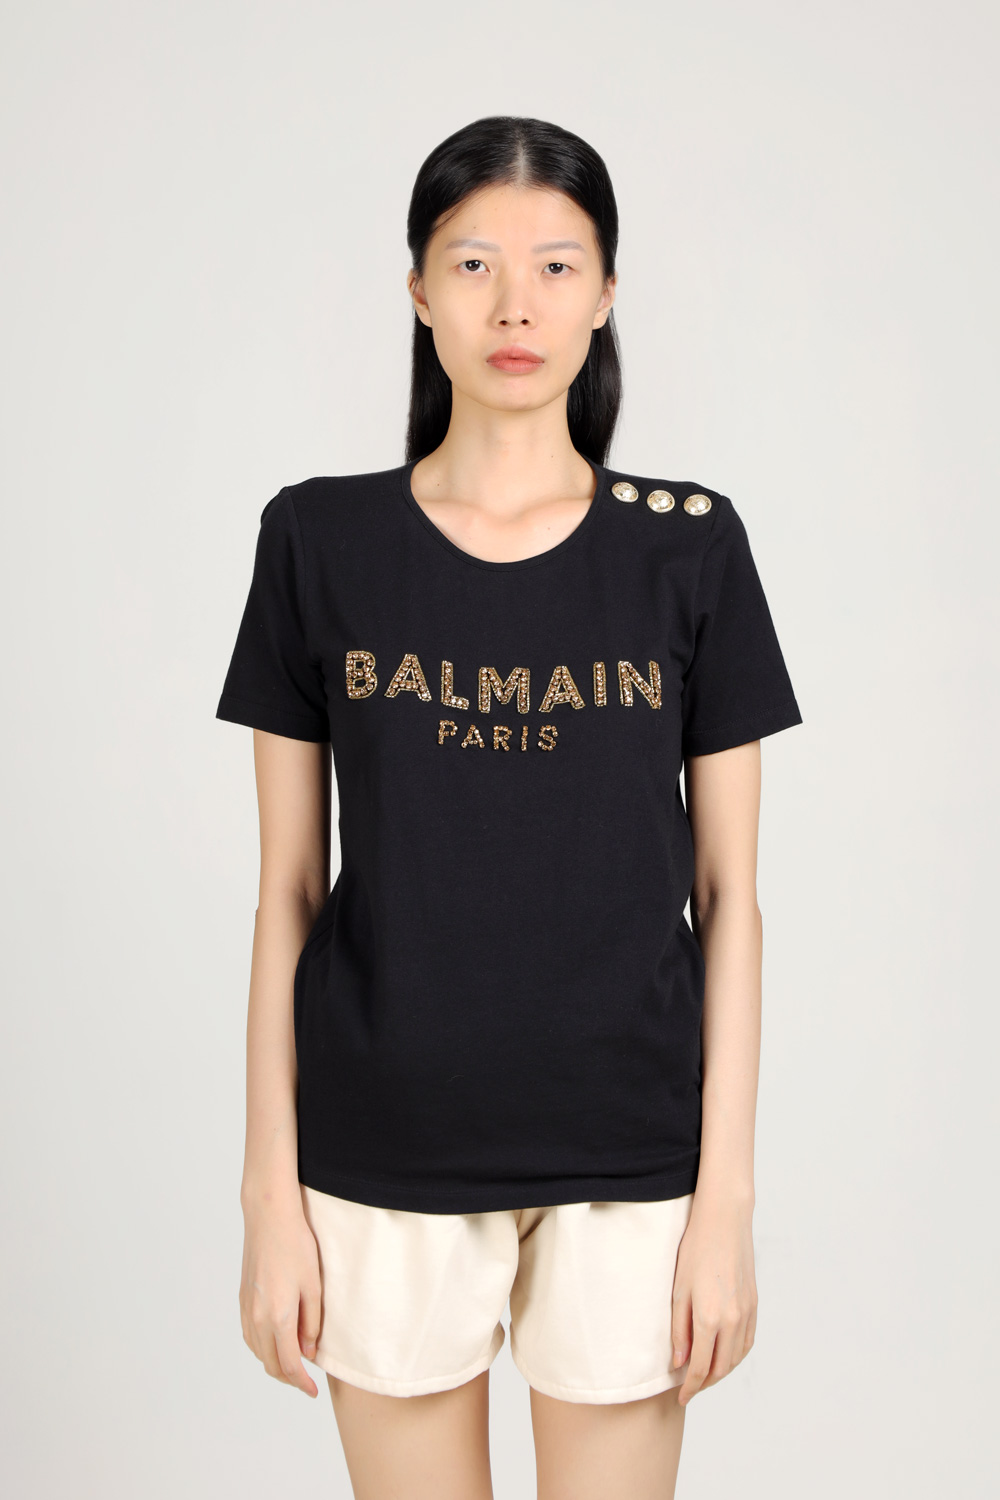 BALMAIN Women 3 Buttons Balmain Paris Rhinestone Logo T-Shirt Black/Gold 1